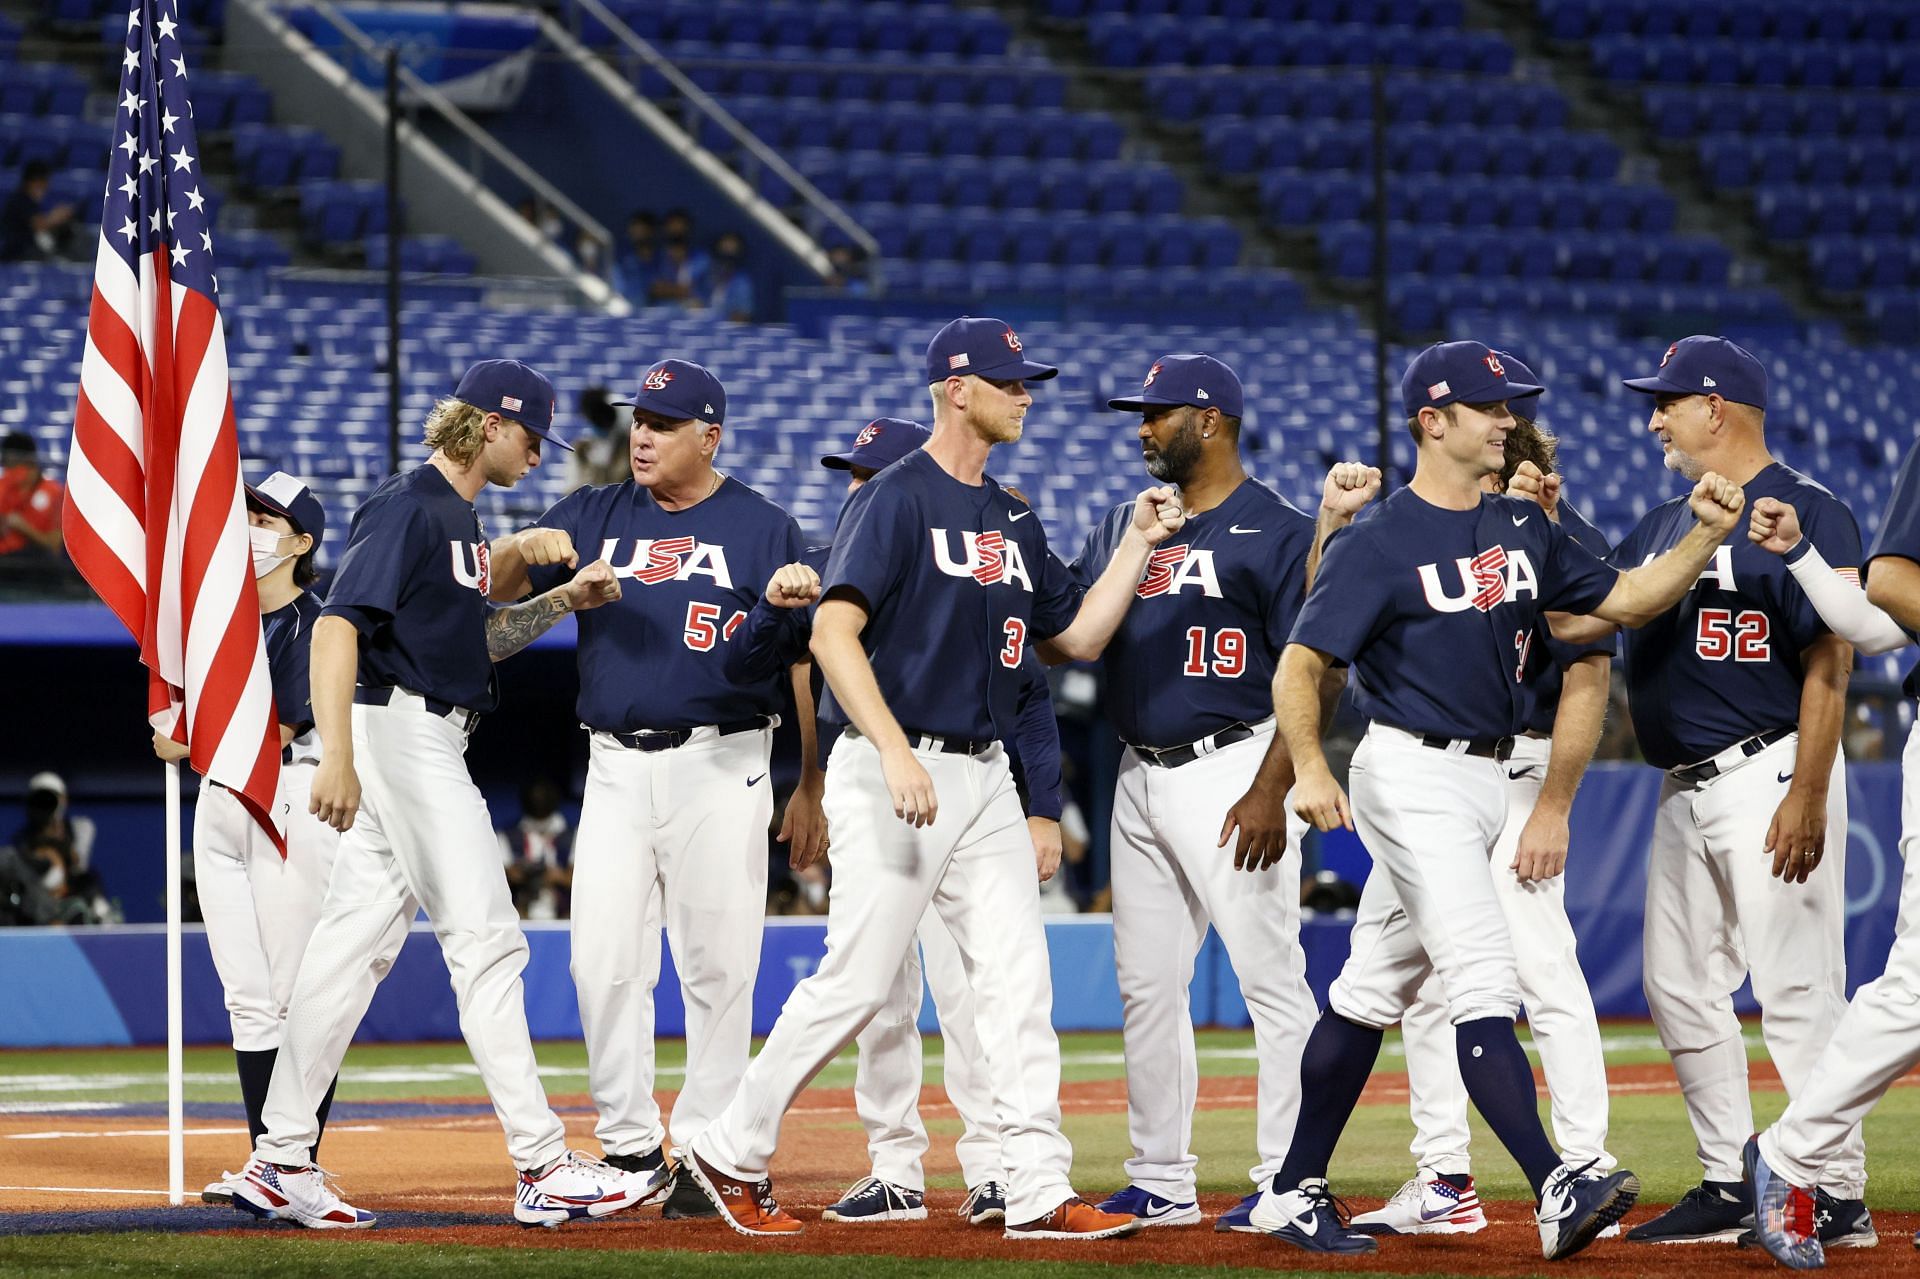 USA Baseball Announces 2023 World Baseball Classic Roster